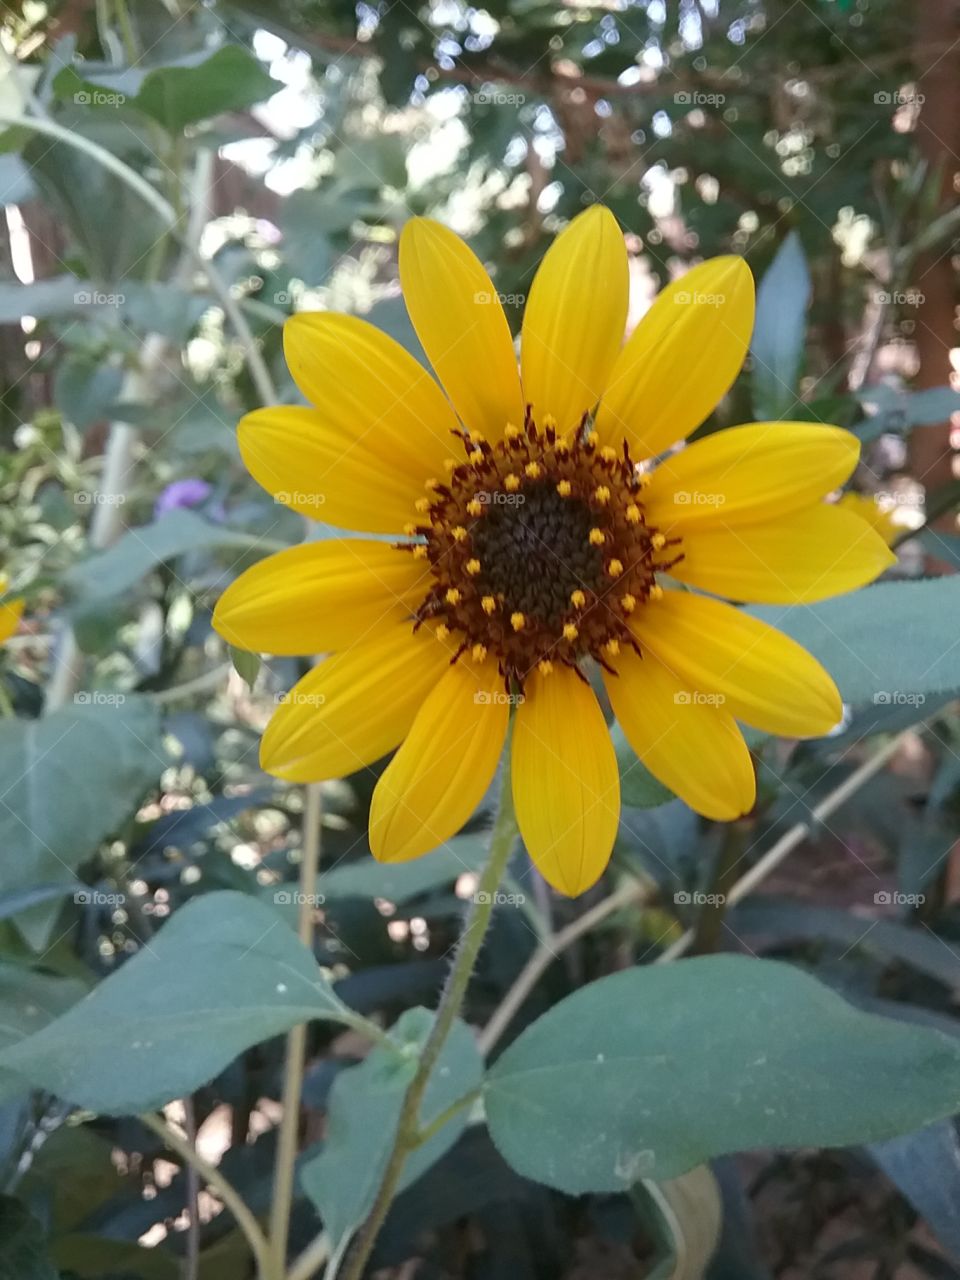 Pretty little sunflowers